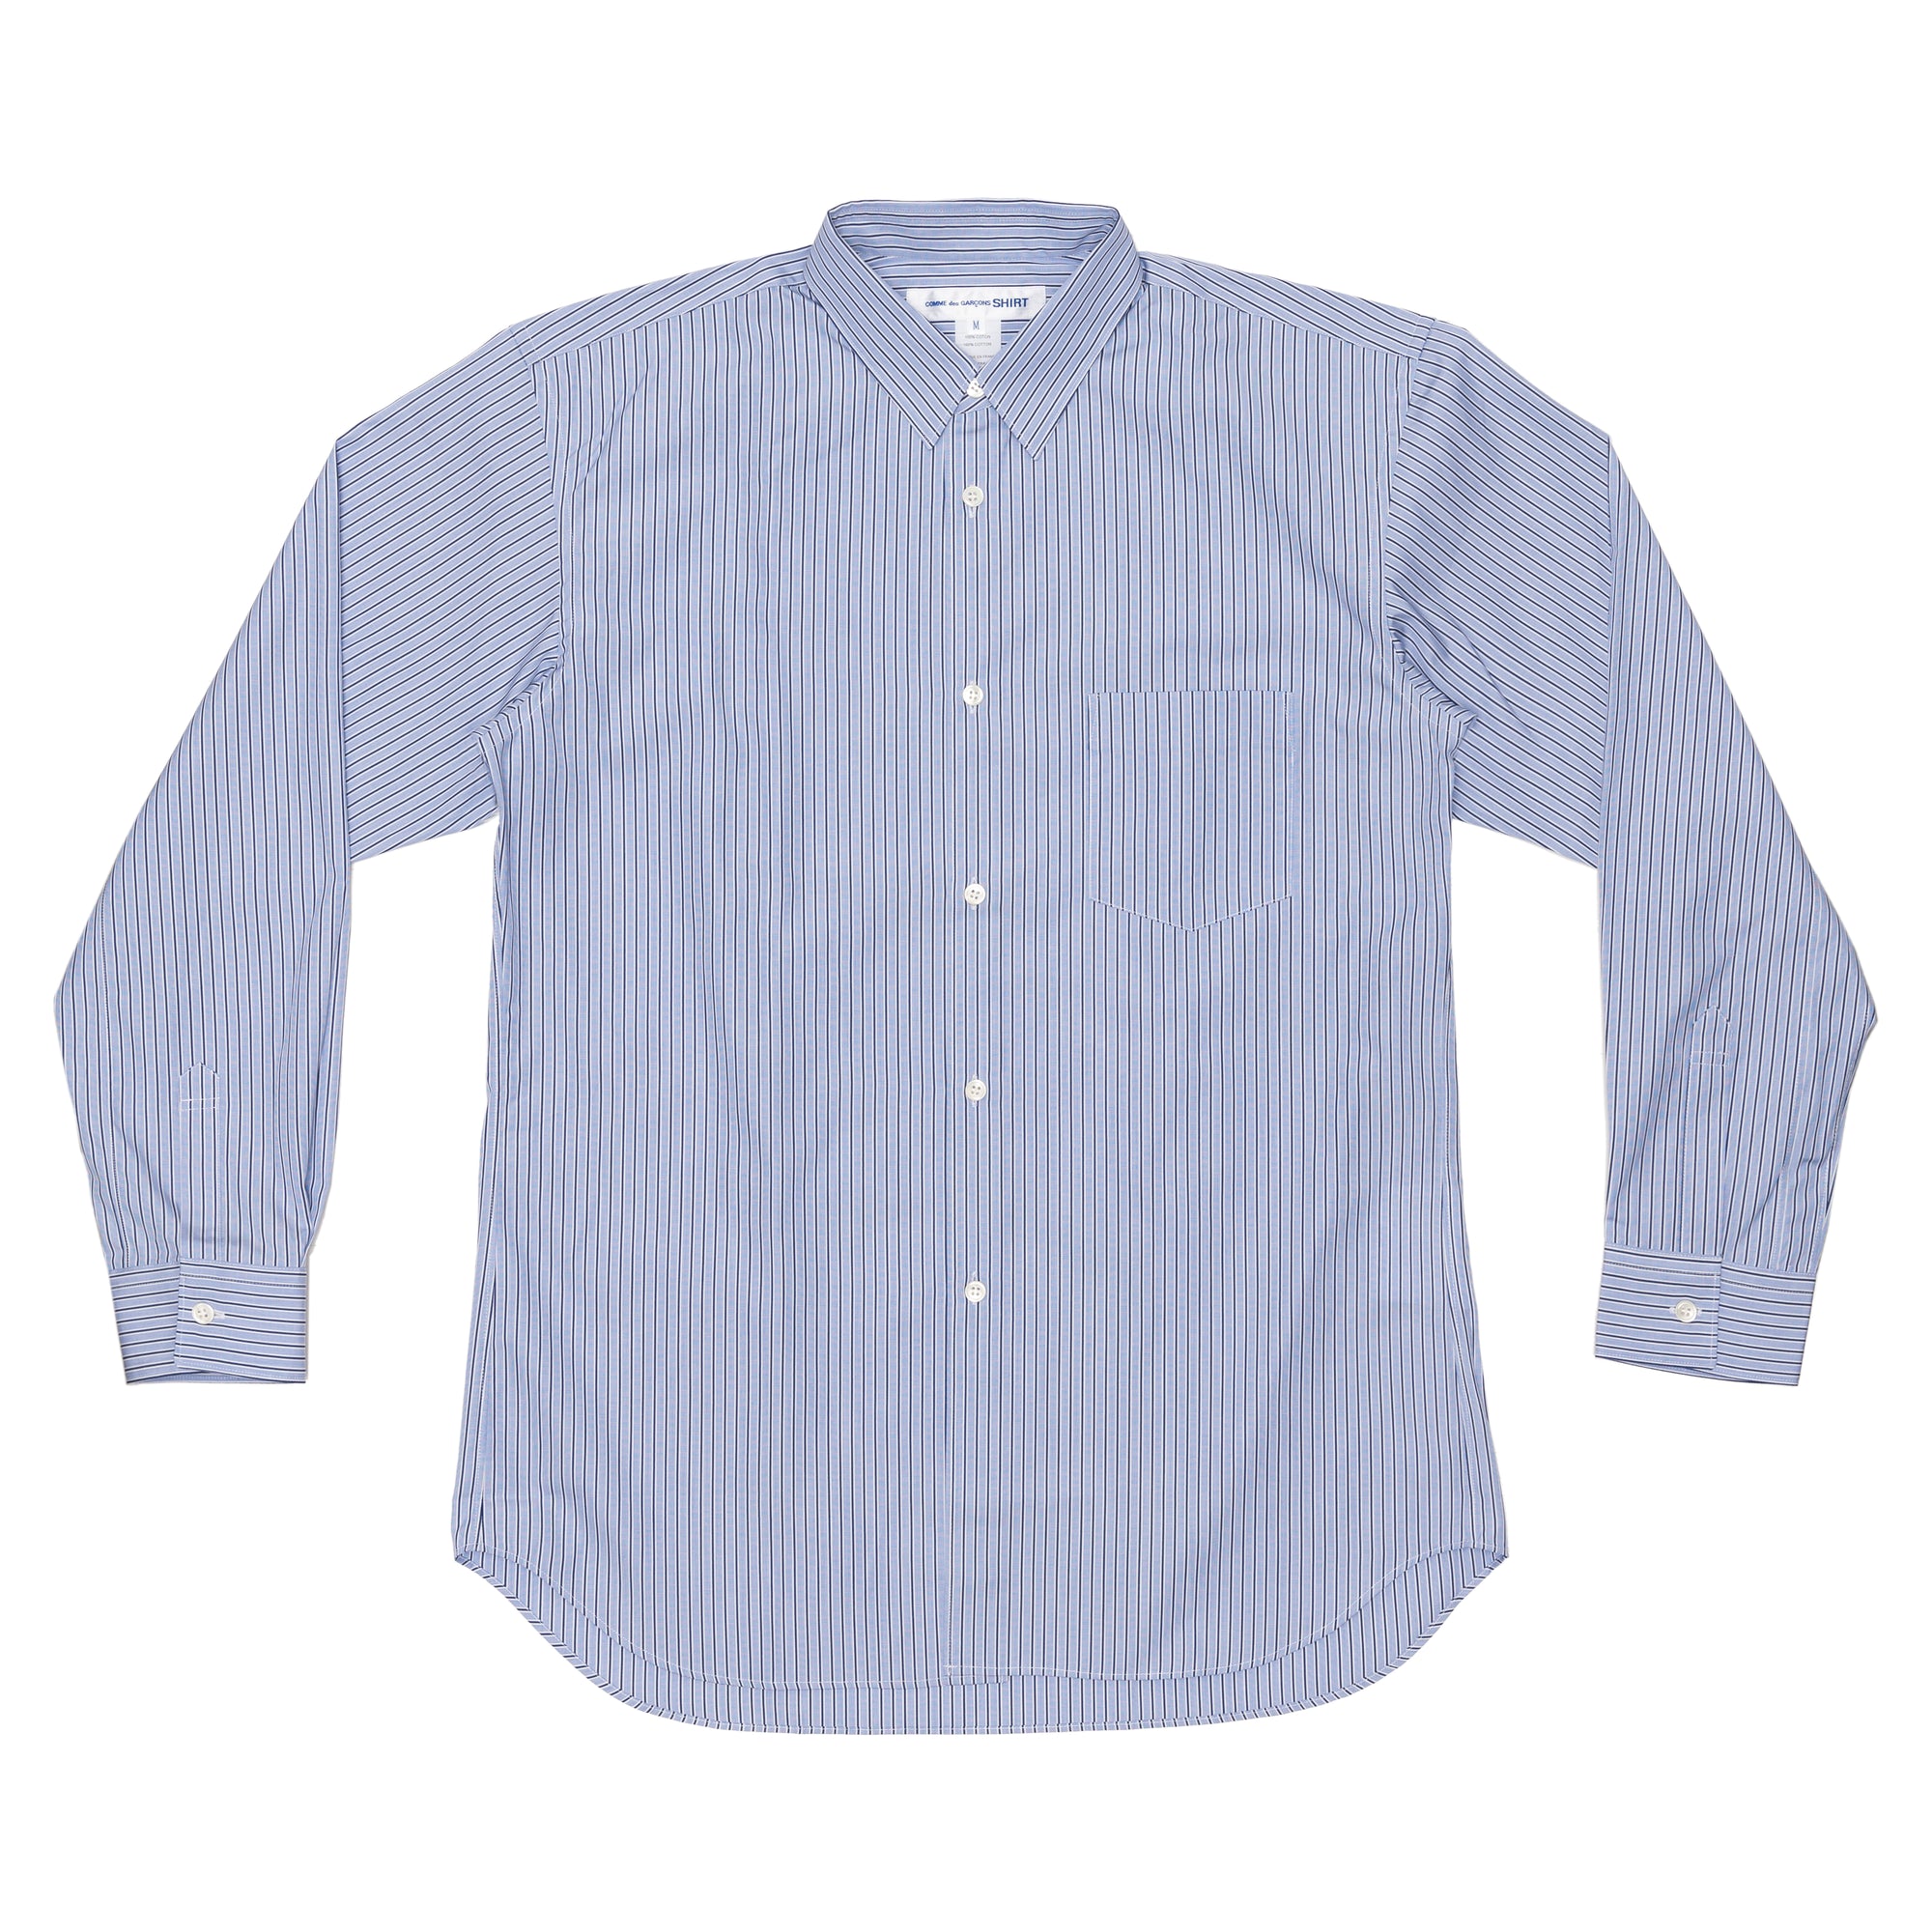 CDG SHIRT FOREVER -Narrow Classic  Yarn Dyed Cotton Poplin Shirt - (Stripe12) view 1